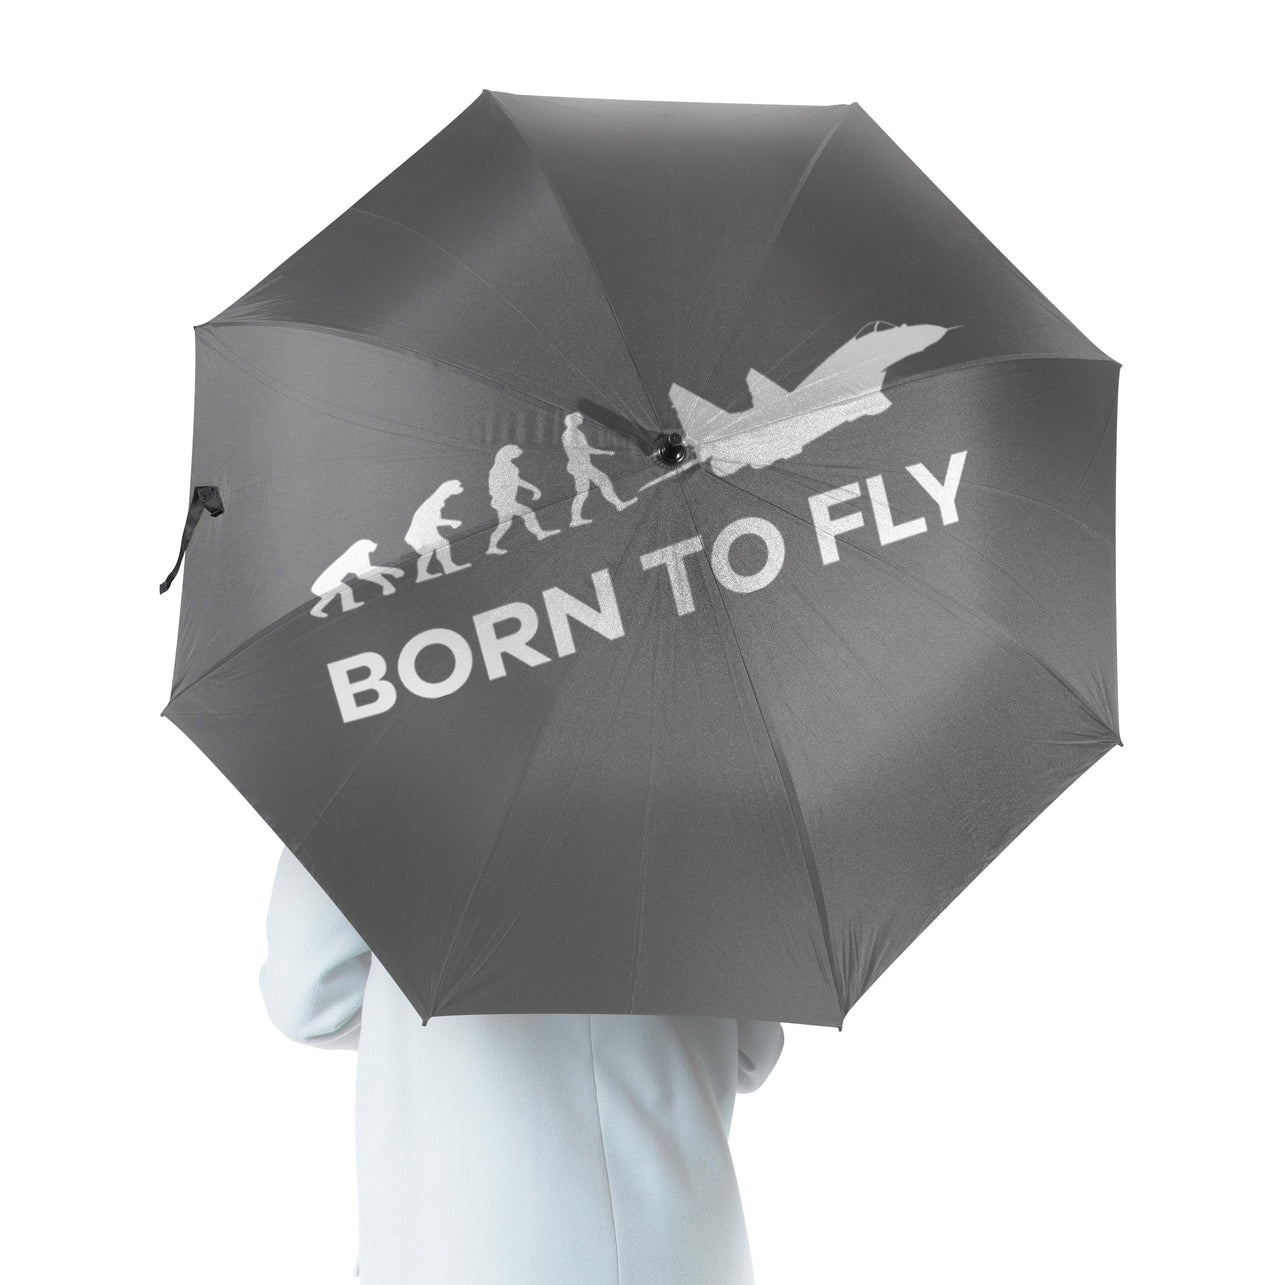 Born To Fly Military Designed Umbrella